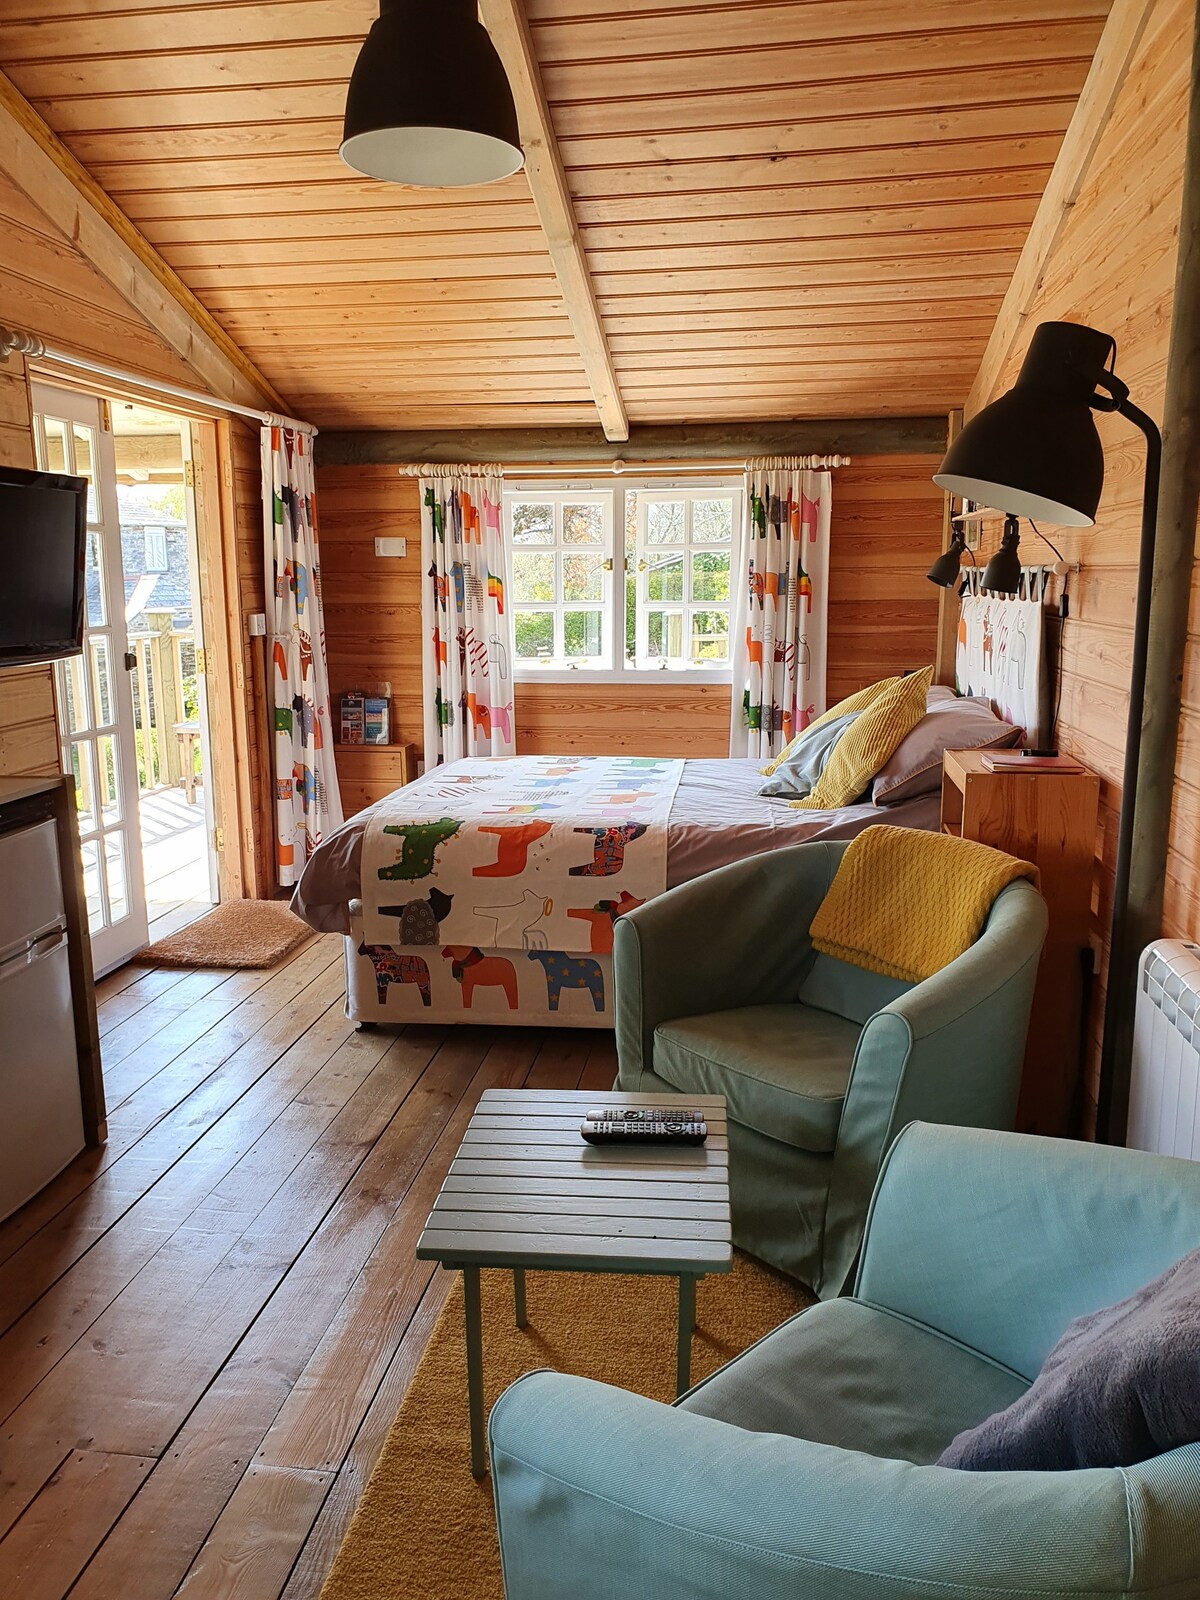 Cornwall Stuga (log cabin) near to Port Isaac